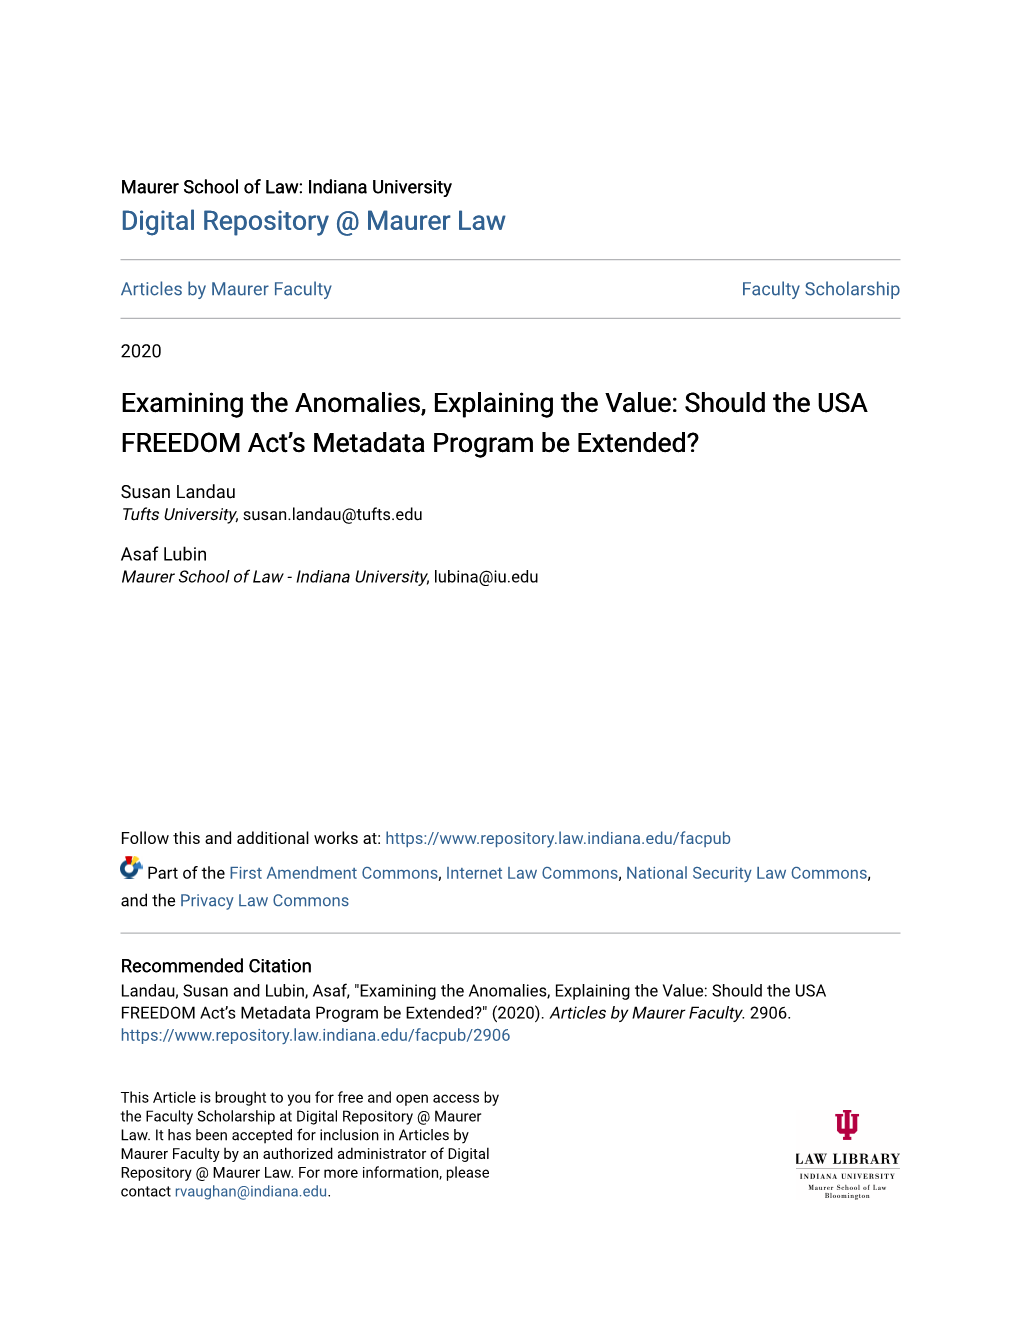 Examining the Anomalies, Explaining the Value: Should the USA FREEDOM Act’S Metadata Program Be Extended?